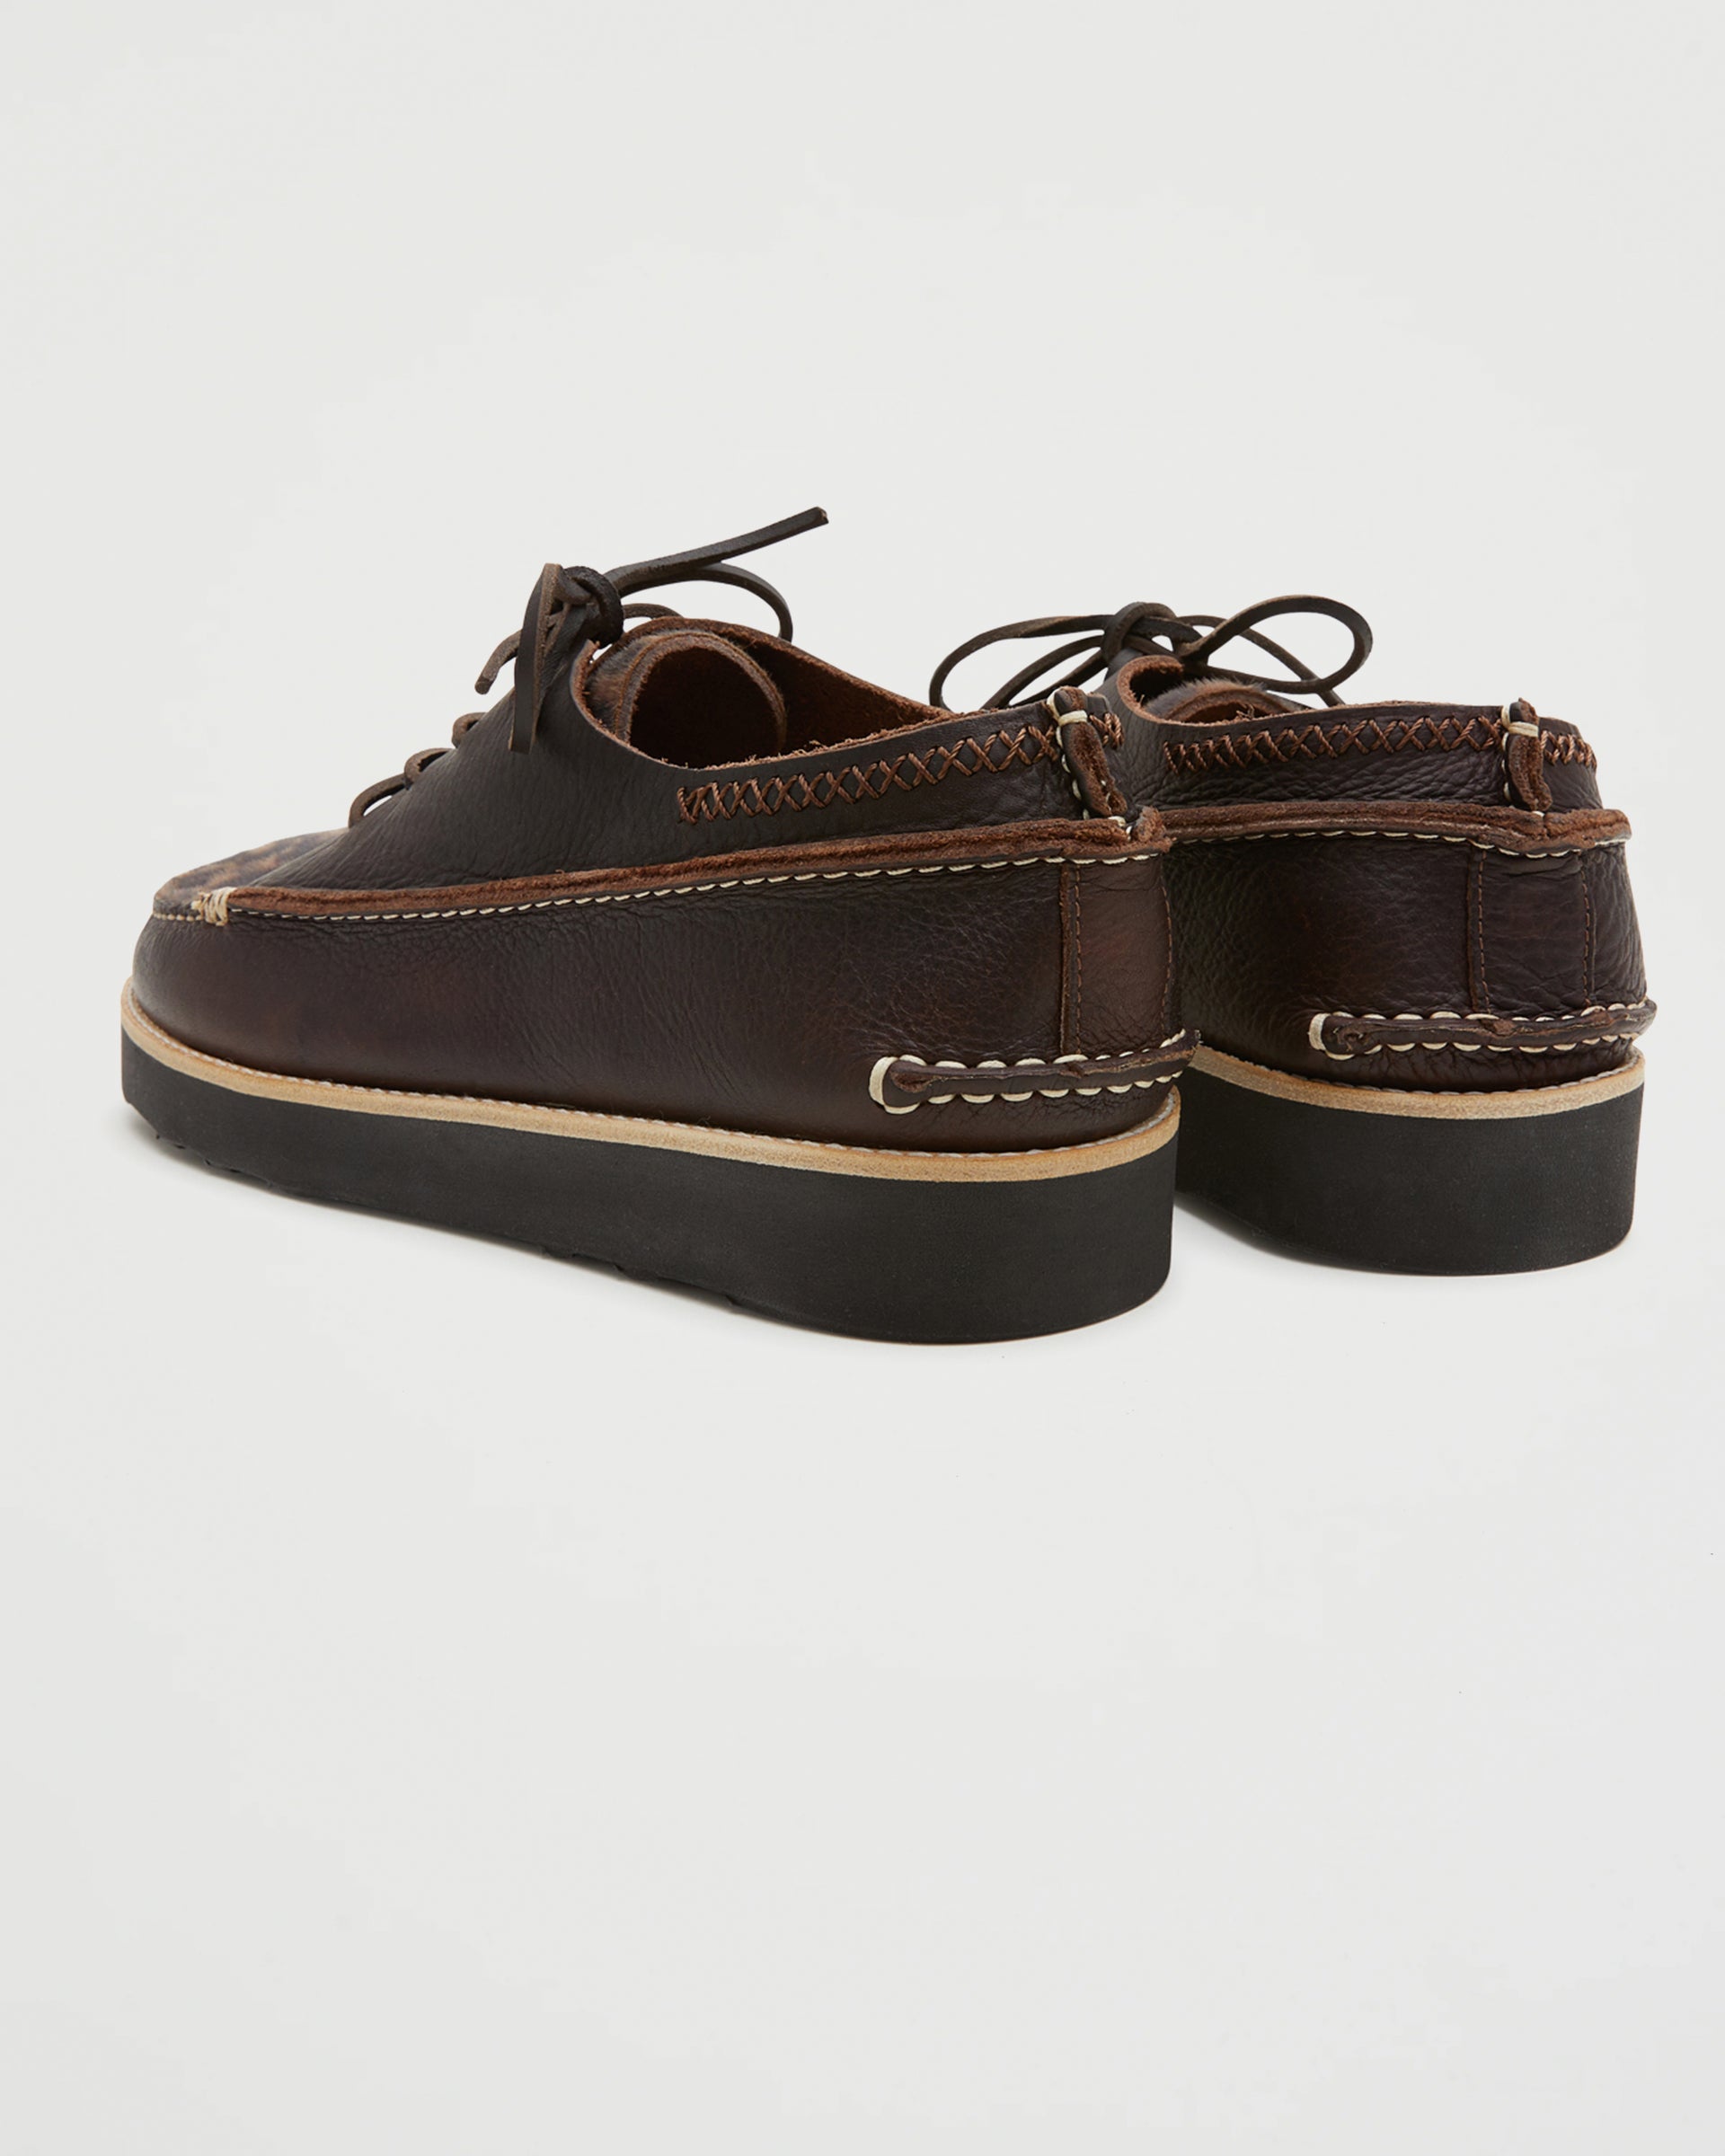 Yogi Footwear Yogi x Universal Works Finn Dark Brown/Leopard Tumbled/Fur Leather Shoes Leather Men